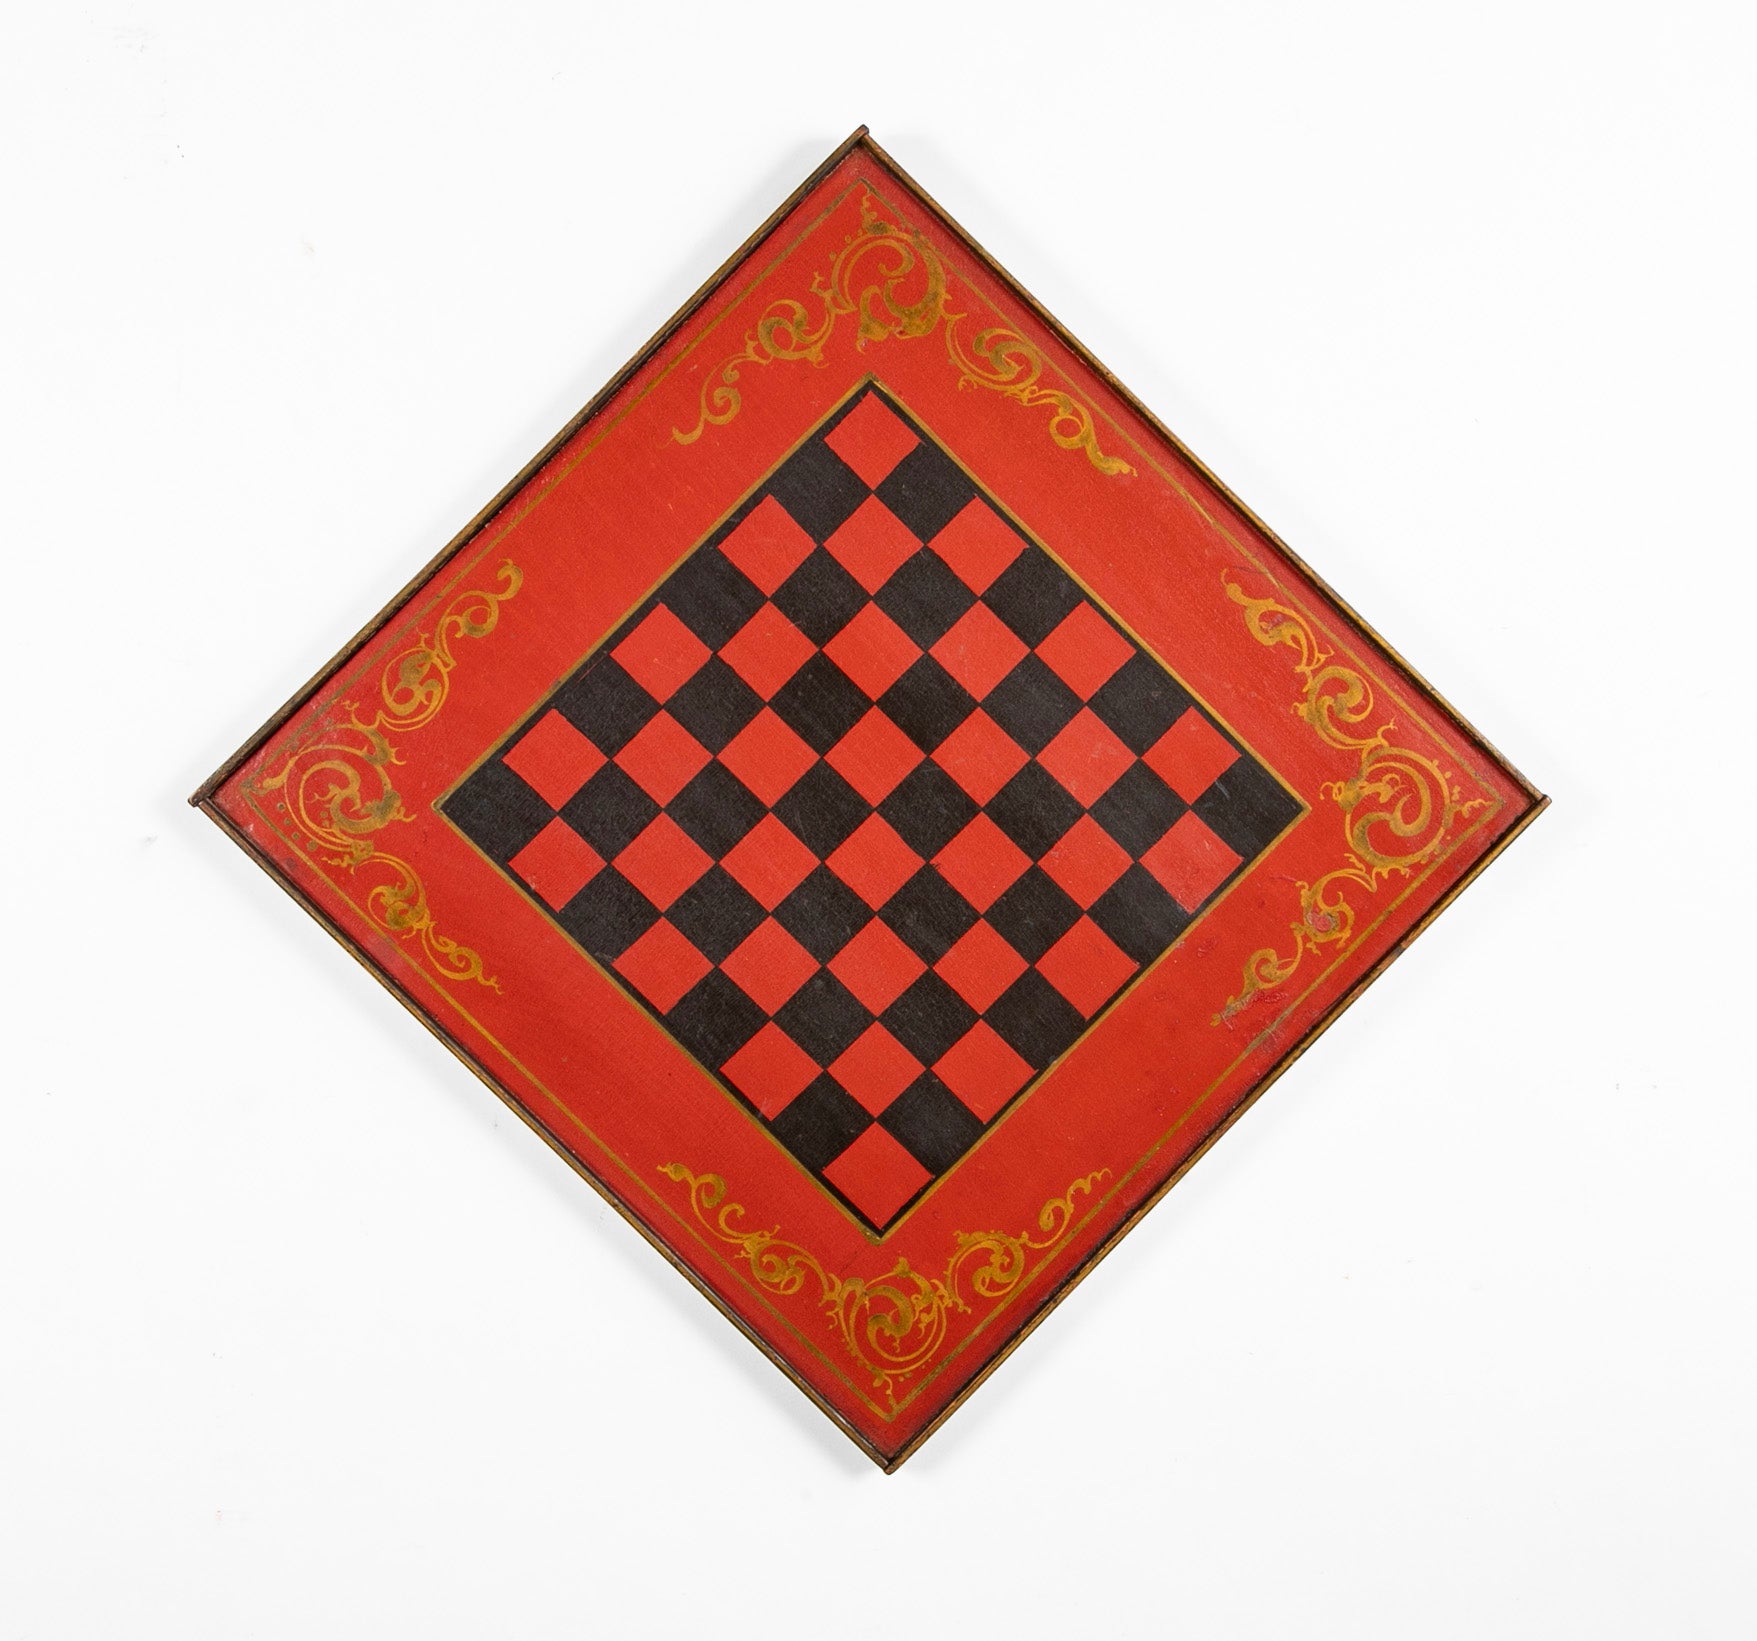 Late 19th Century American Black & Red Checkerboard